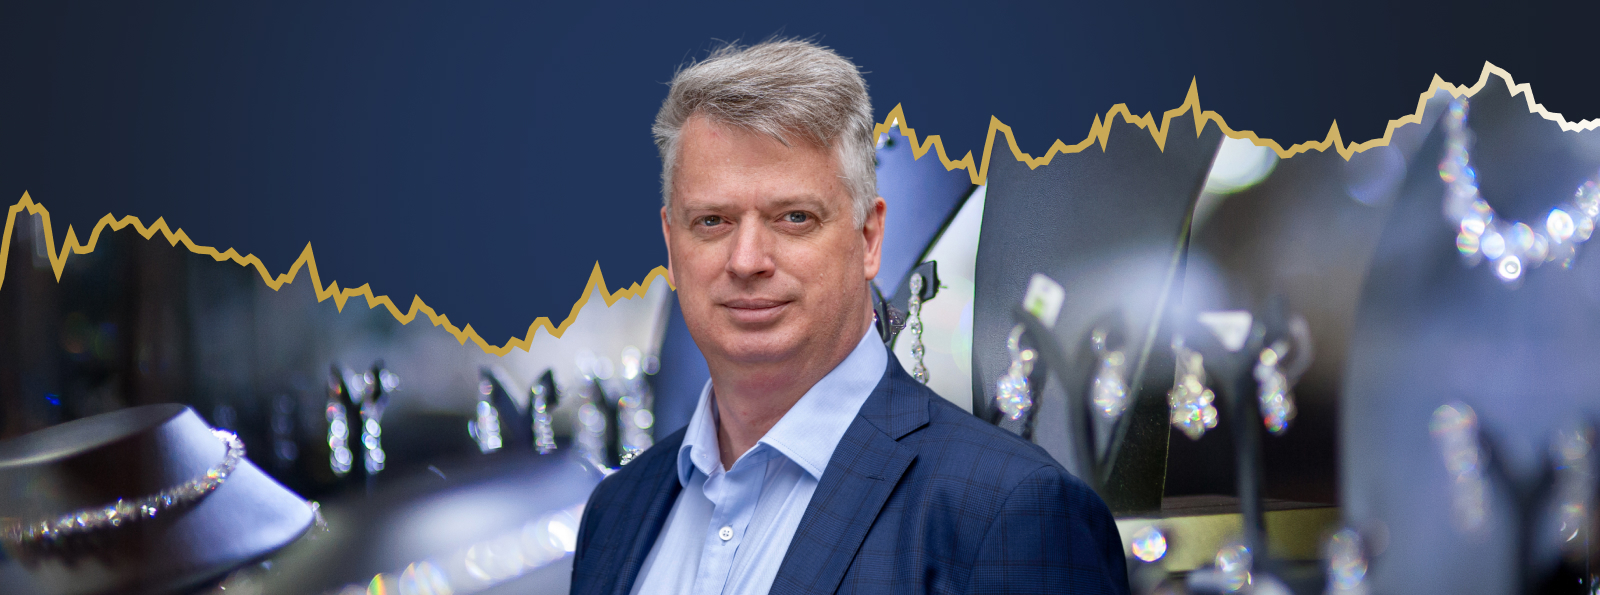 Lovisa (ASX:LOV) share price falls on surprise CEO exit